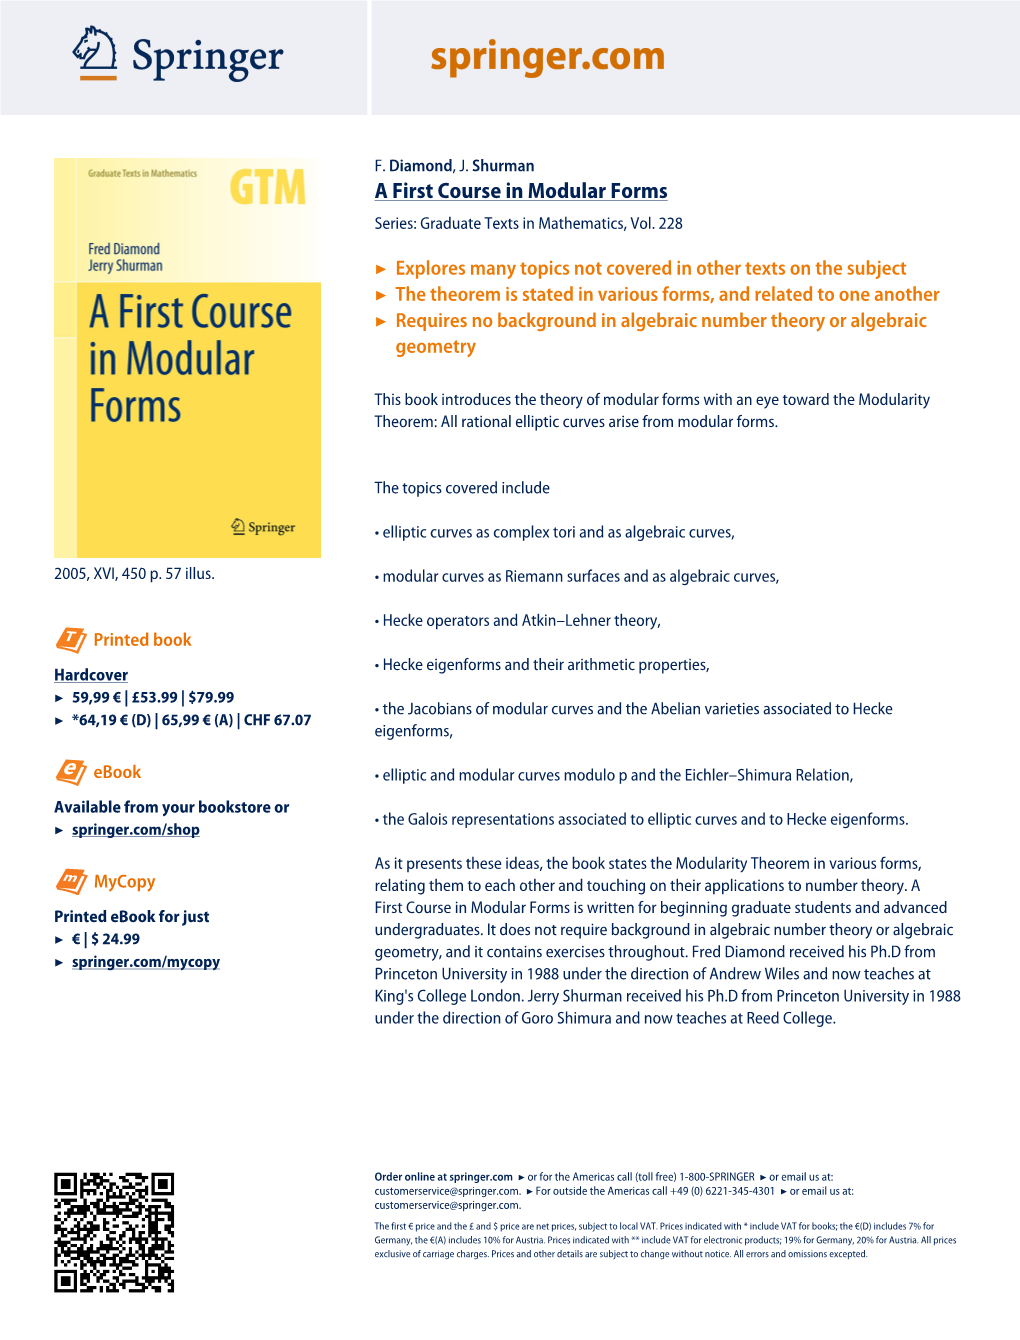 F. Diamond, J. Shurman a First Course in Modular Forms Series: Graduate Texts in Mathematics, Vol